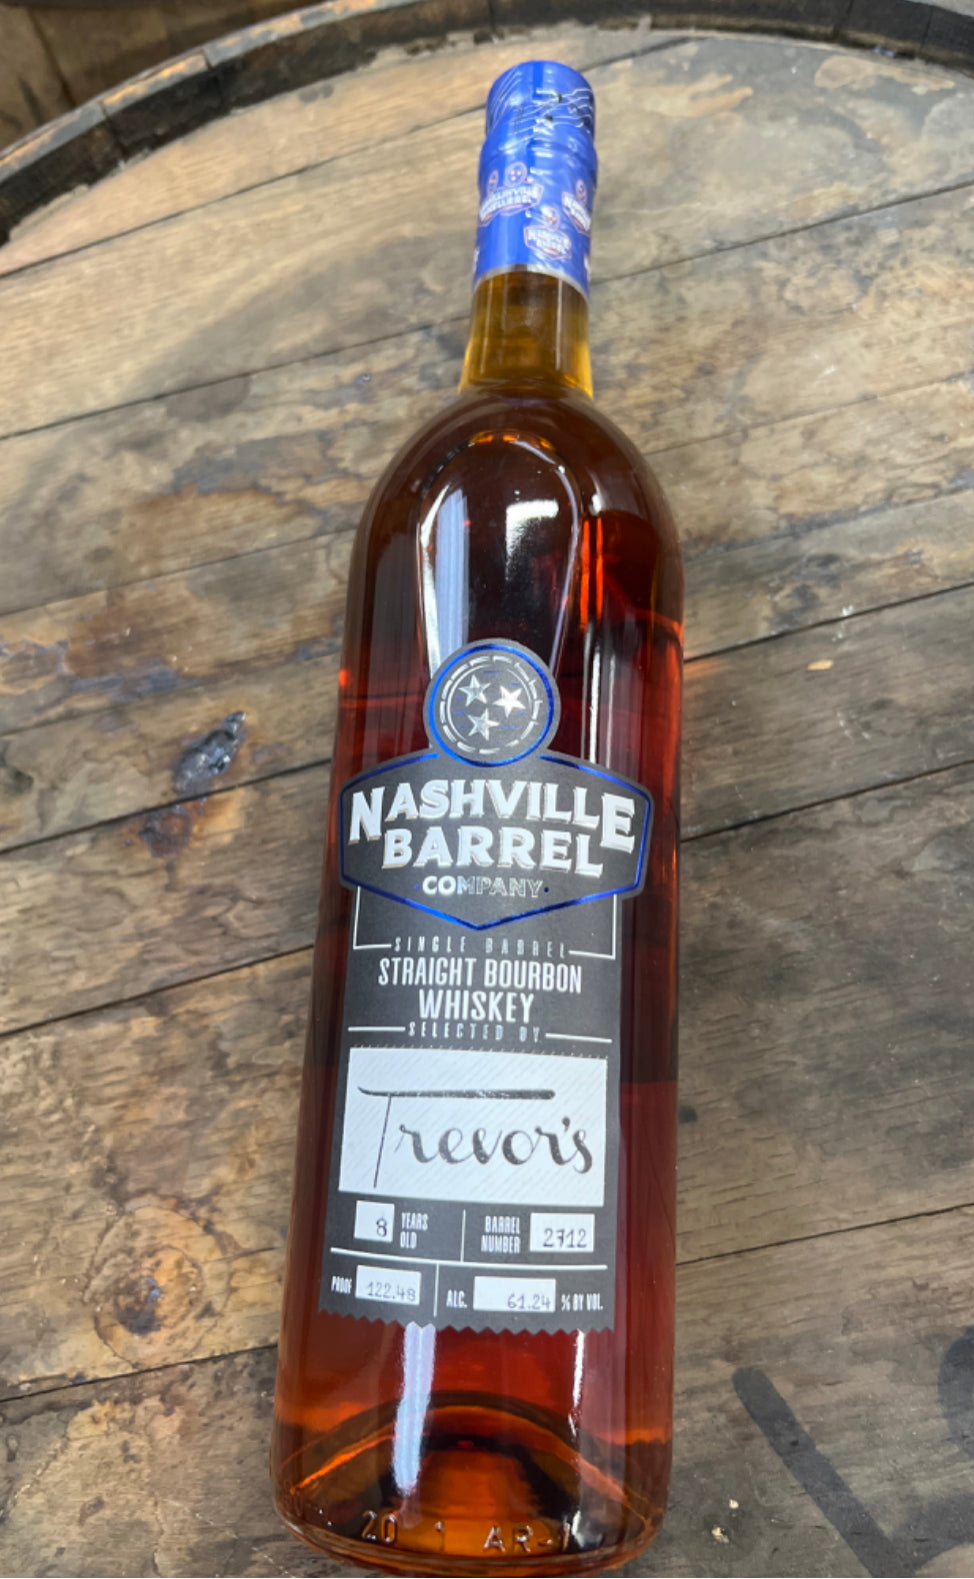 Nashville Barrel Co 8yr Single Barrel Bourbon - #2712 - Trevors